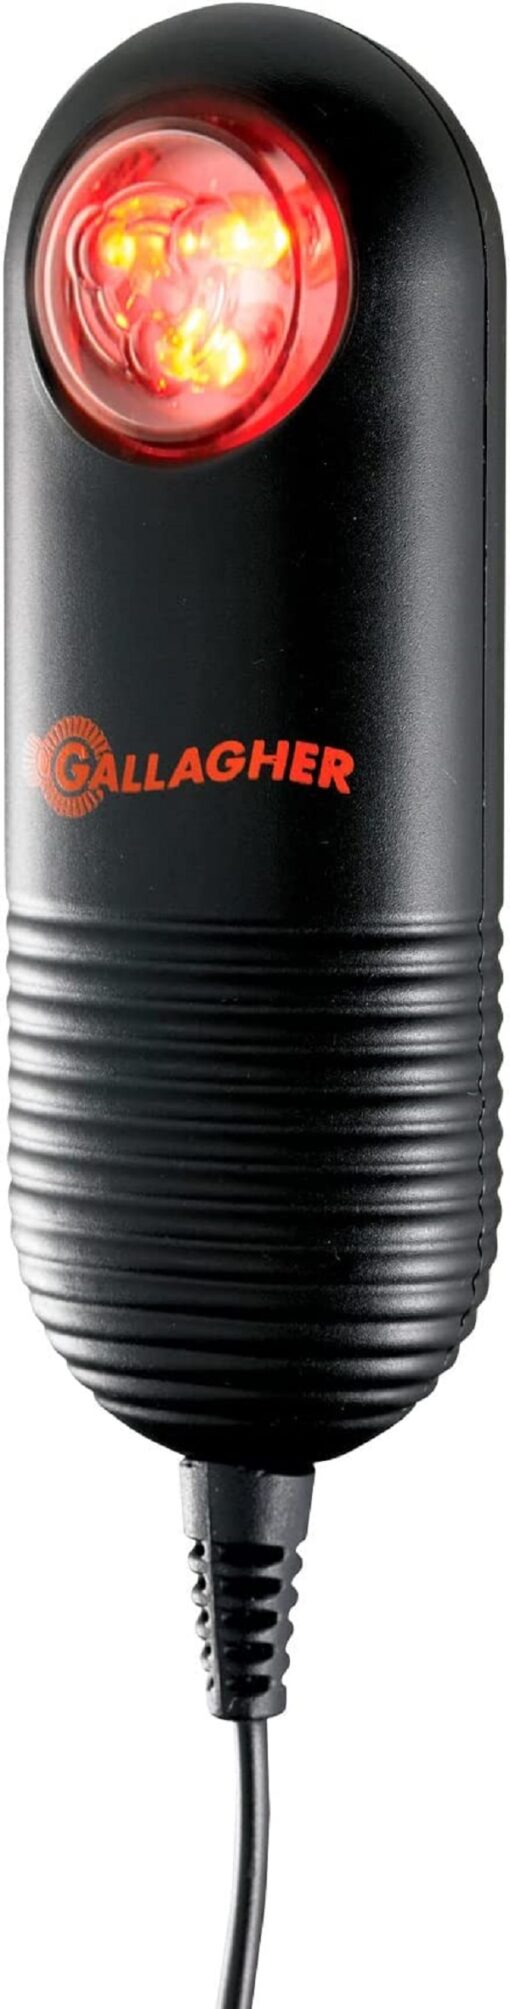 Gallagher Live Fence Indicator/Light